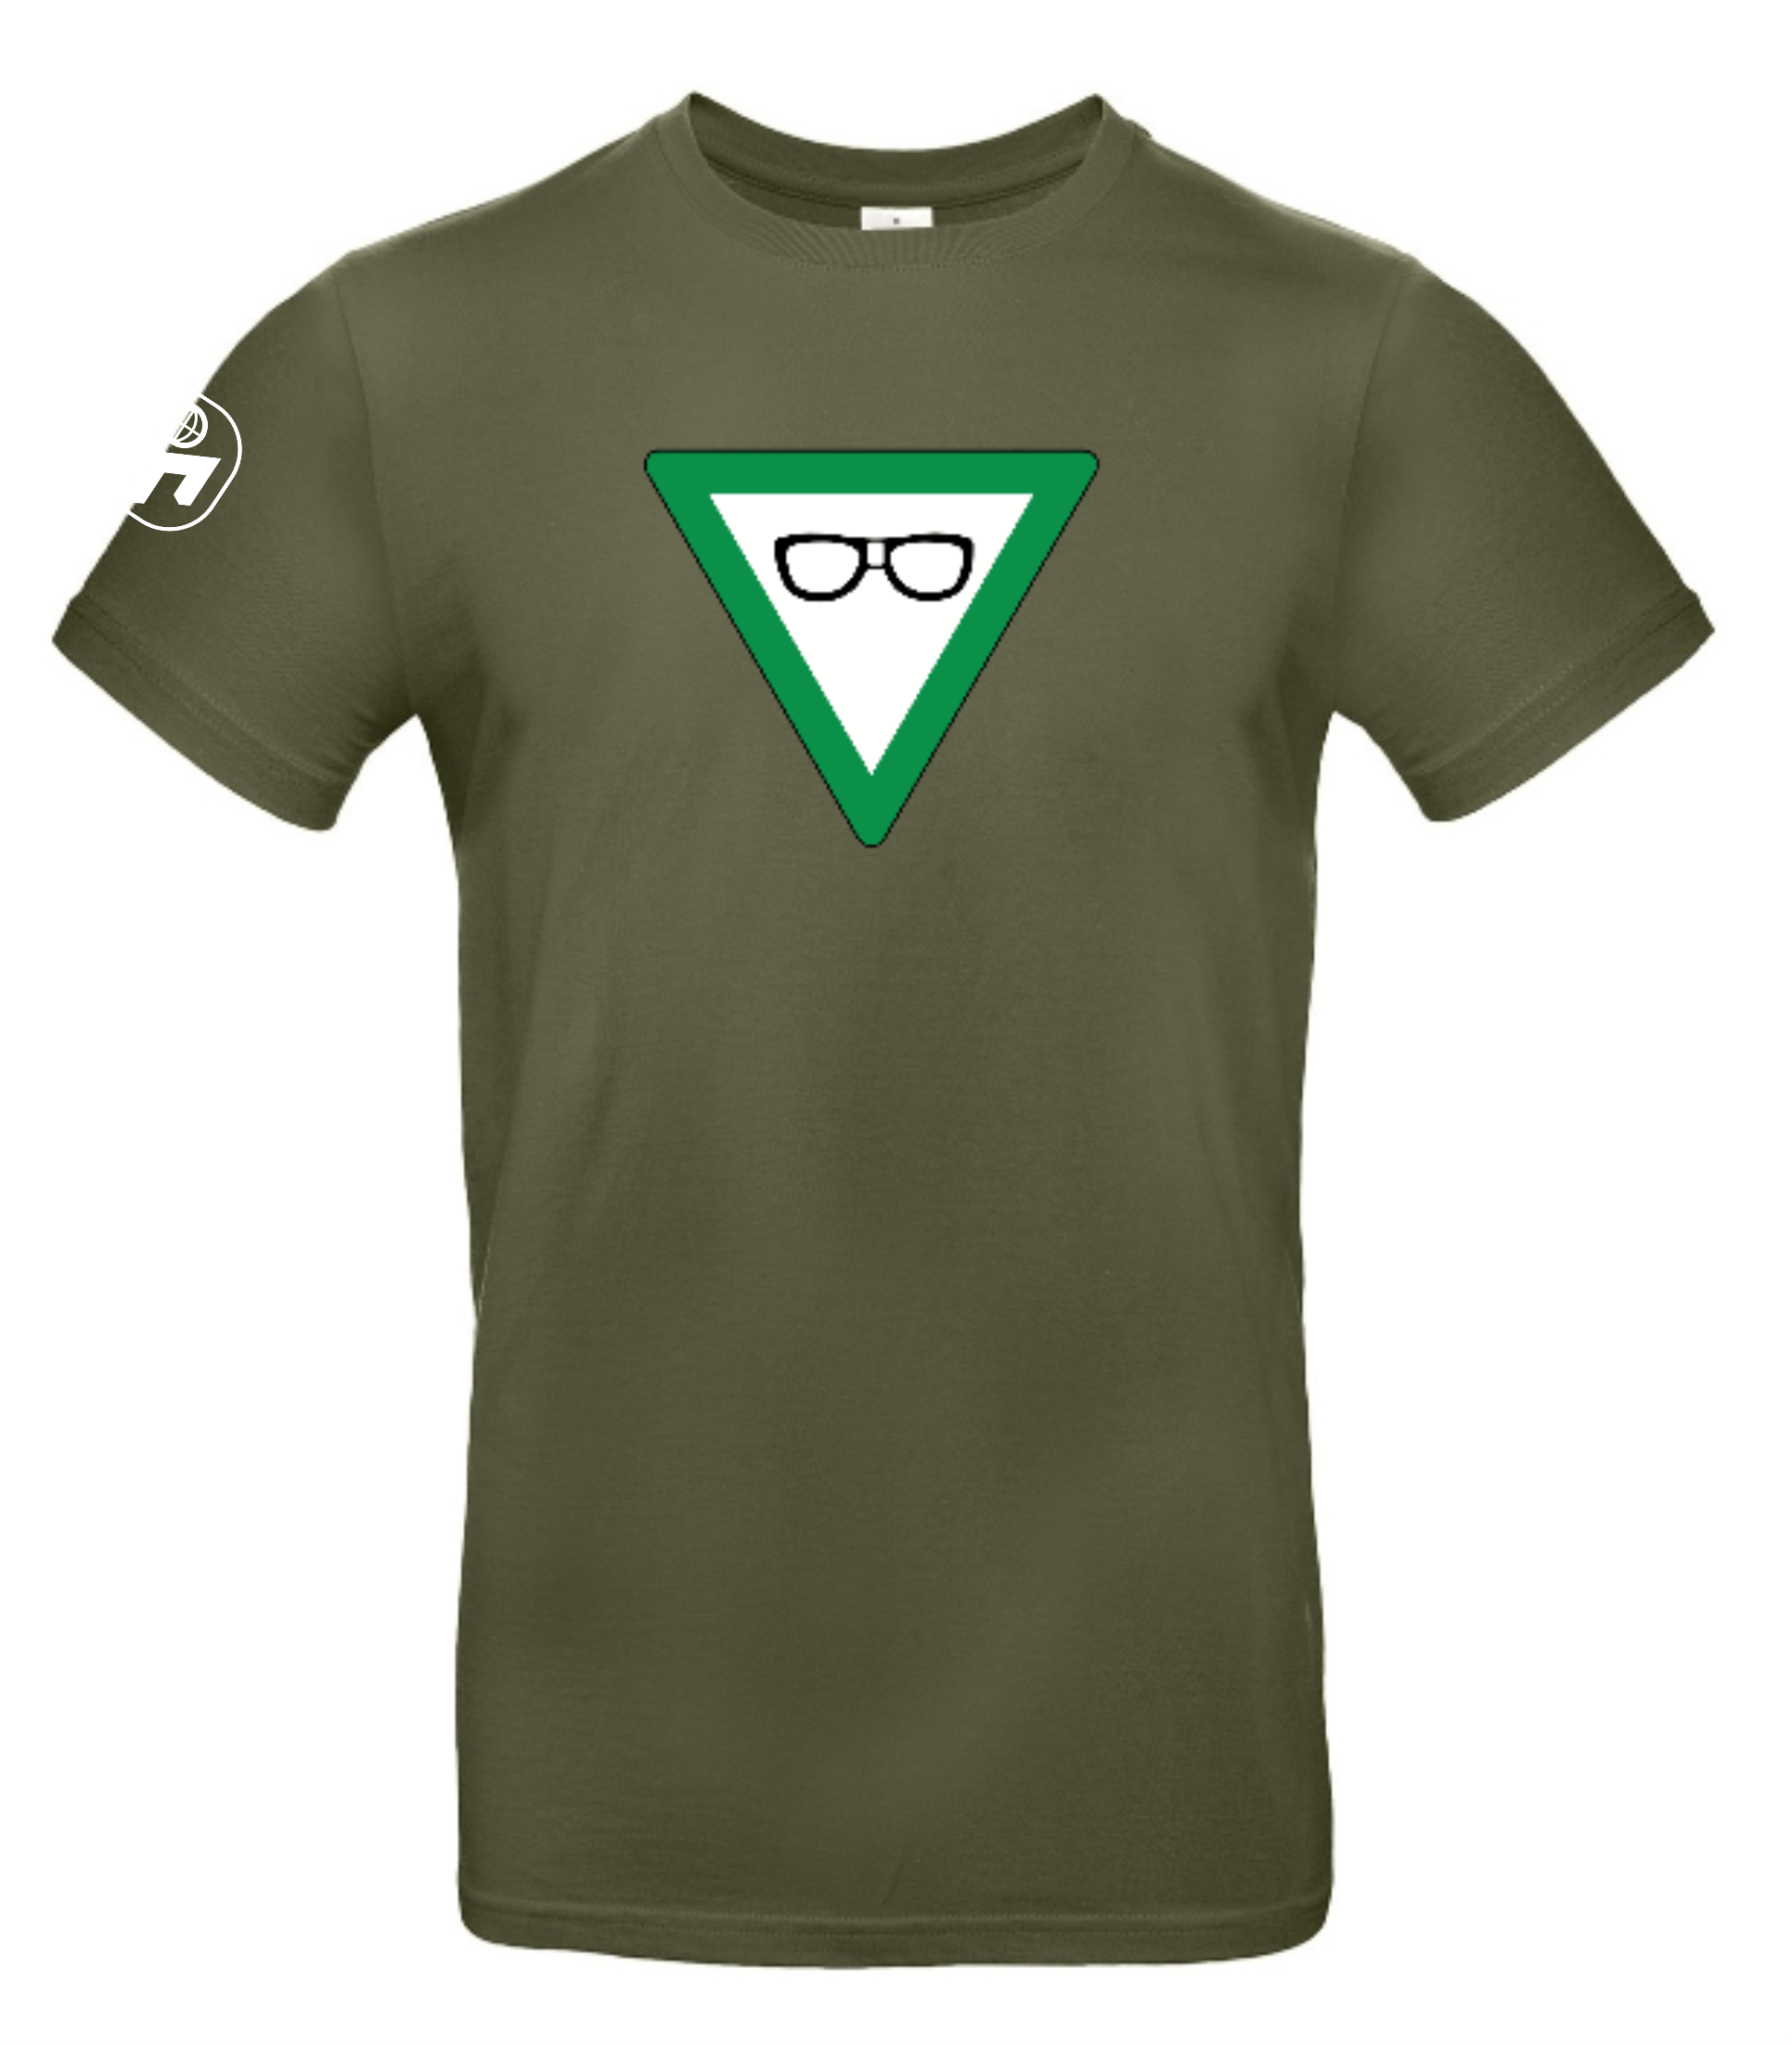 T-Shirt Herren "Nerdschutz" Standard